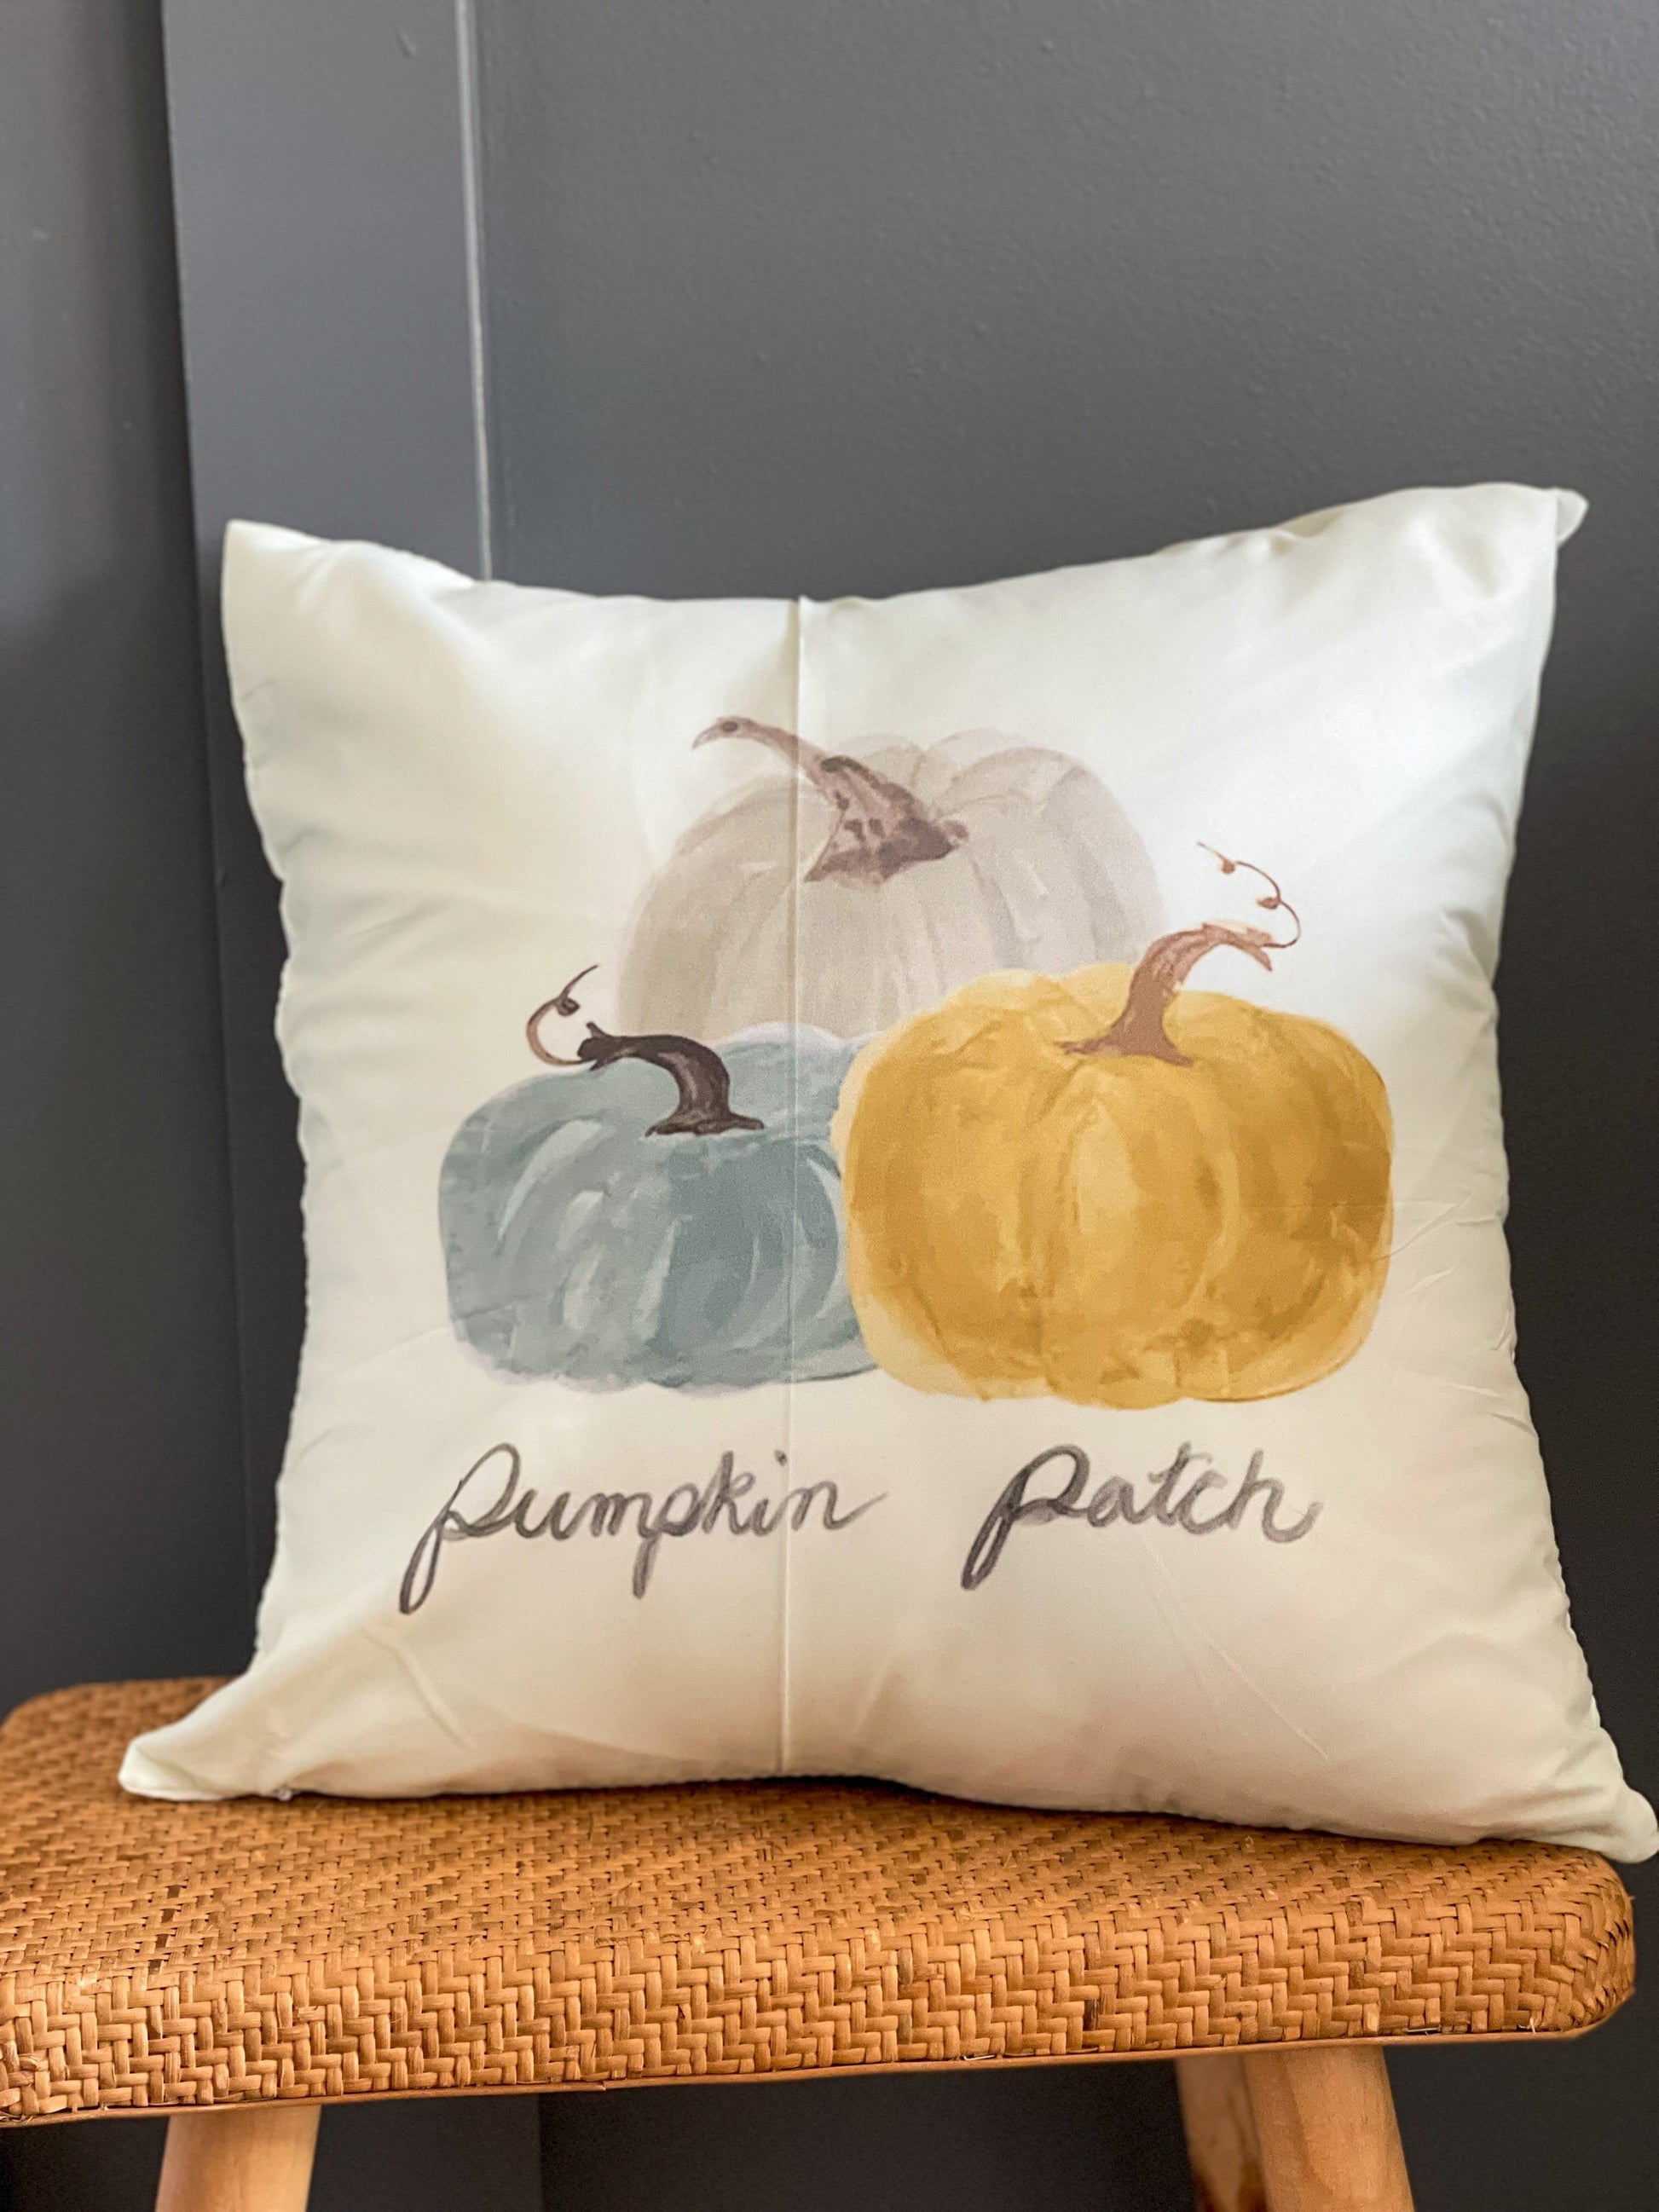 Fall Pillow Covers - Pumpkin Patch - Fall decor